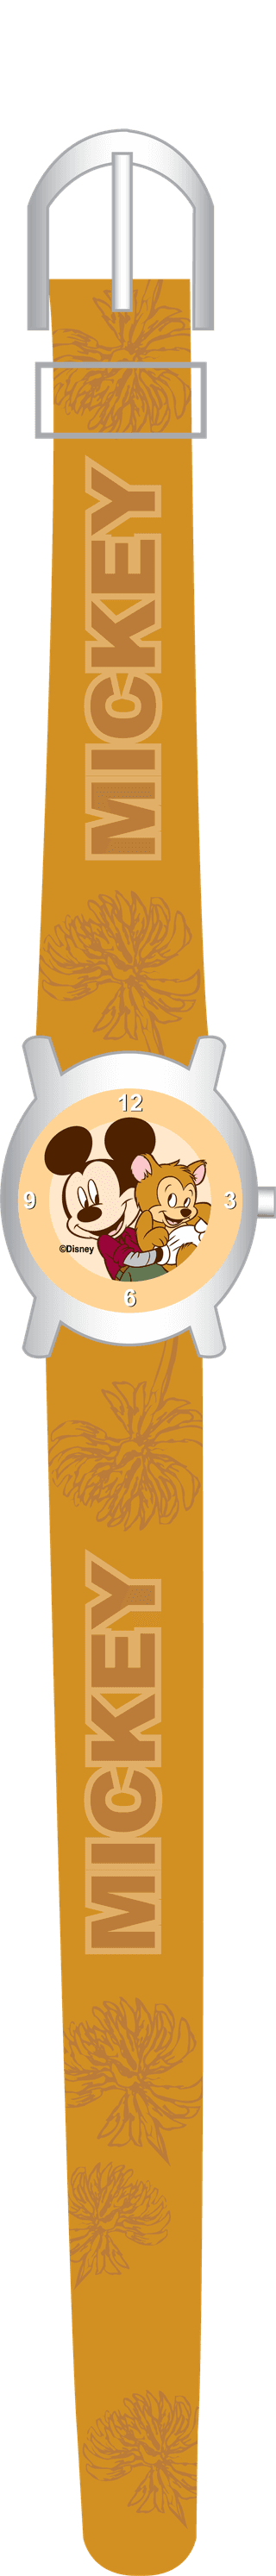 watchmickey-mouse-cartoon-series-vector-771564